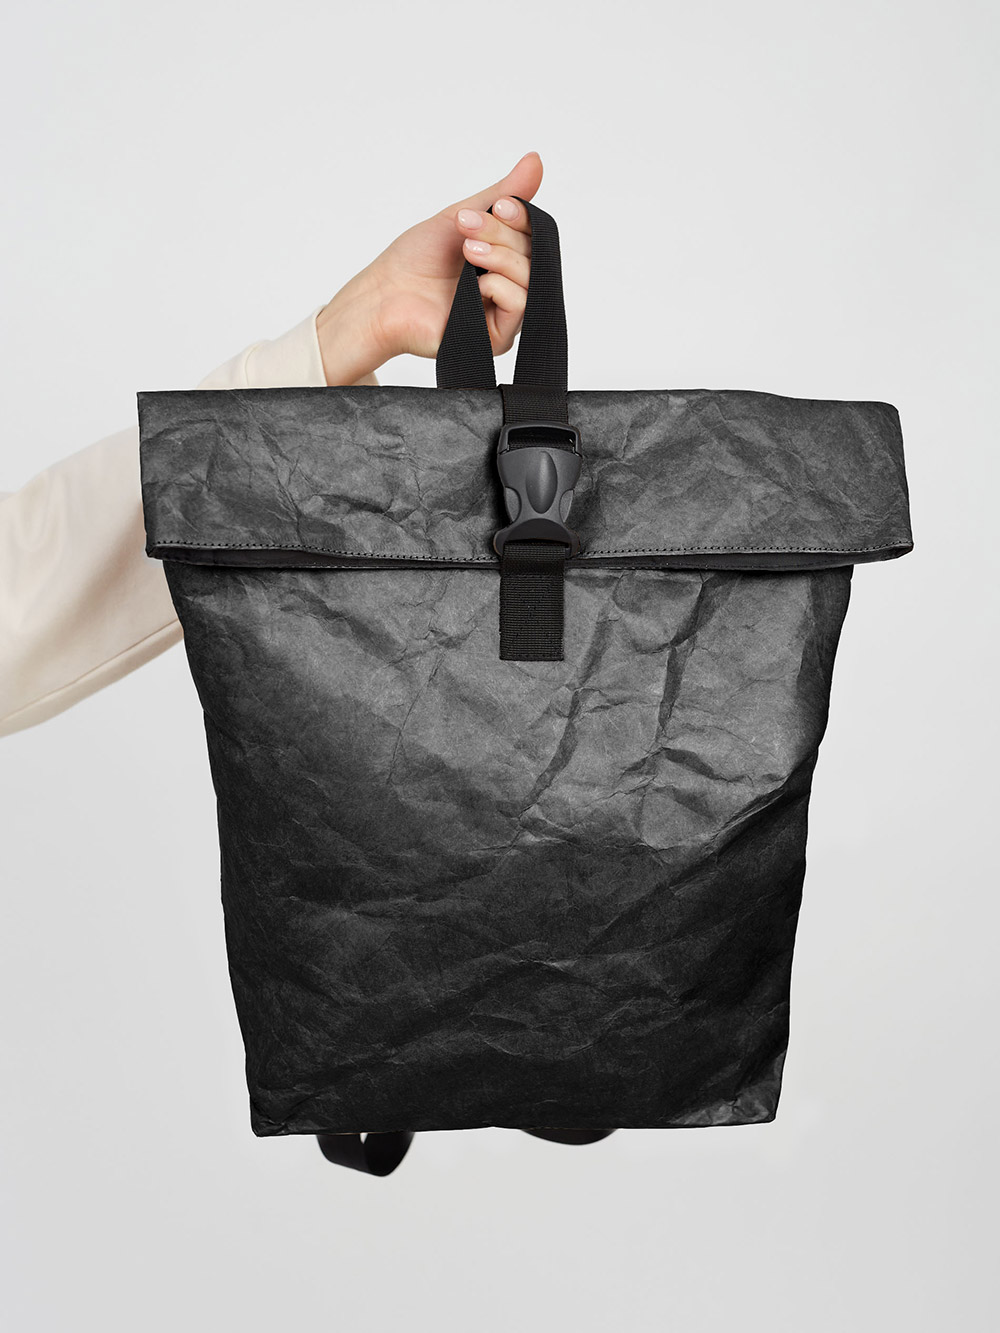 Рюкзак Rolly Kraft Black картинка крафт-сумки